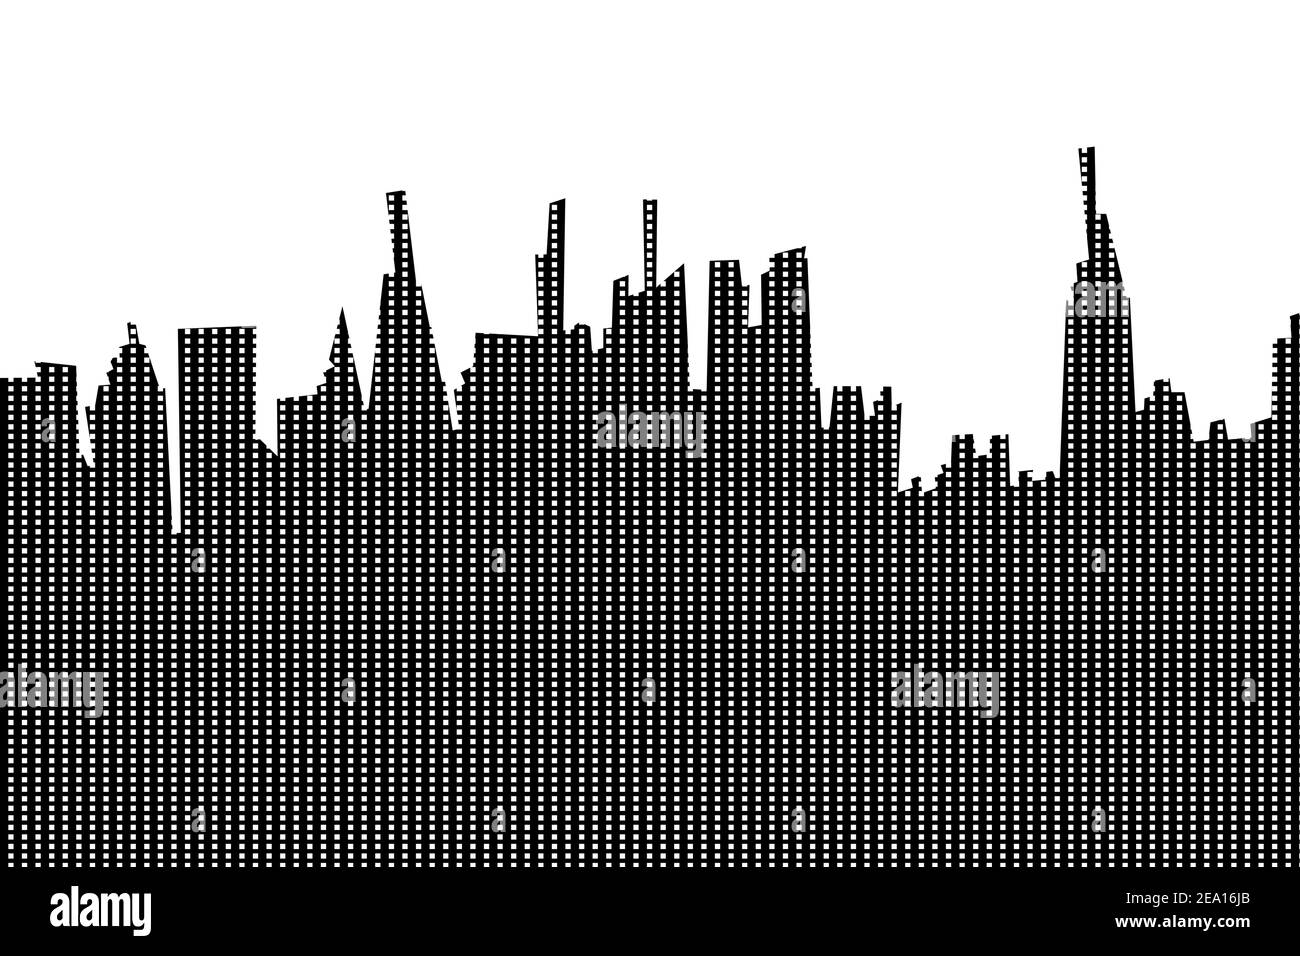 New York City Silhouette mit Fenster Muster EPS10 vextor schwarz-weiß Illustration. Stock Vektor